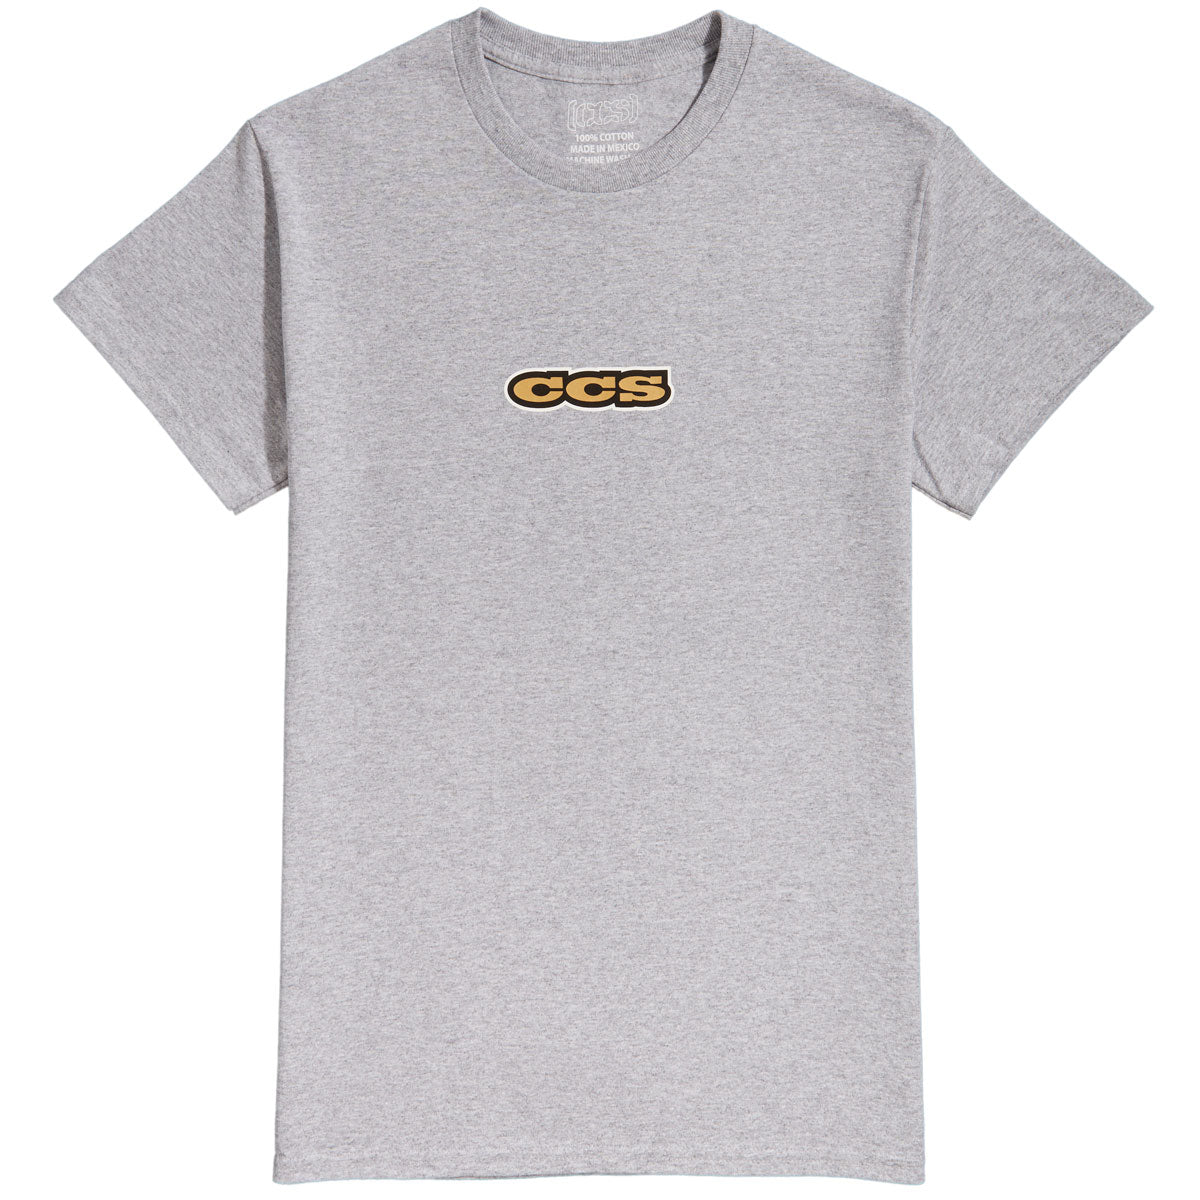 CCS 96 Logo T-Shirt - Sport Grey/Gold/White image 1